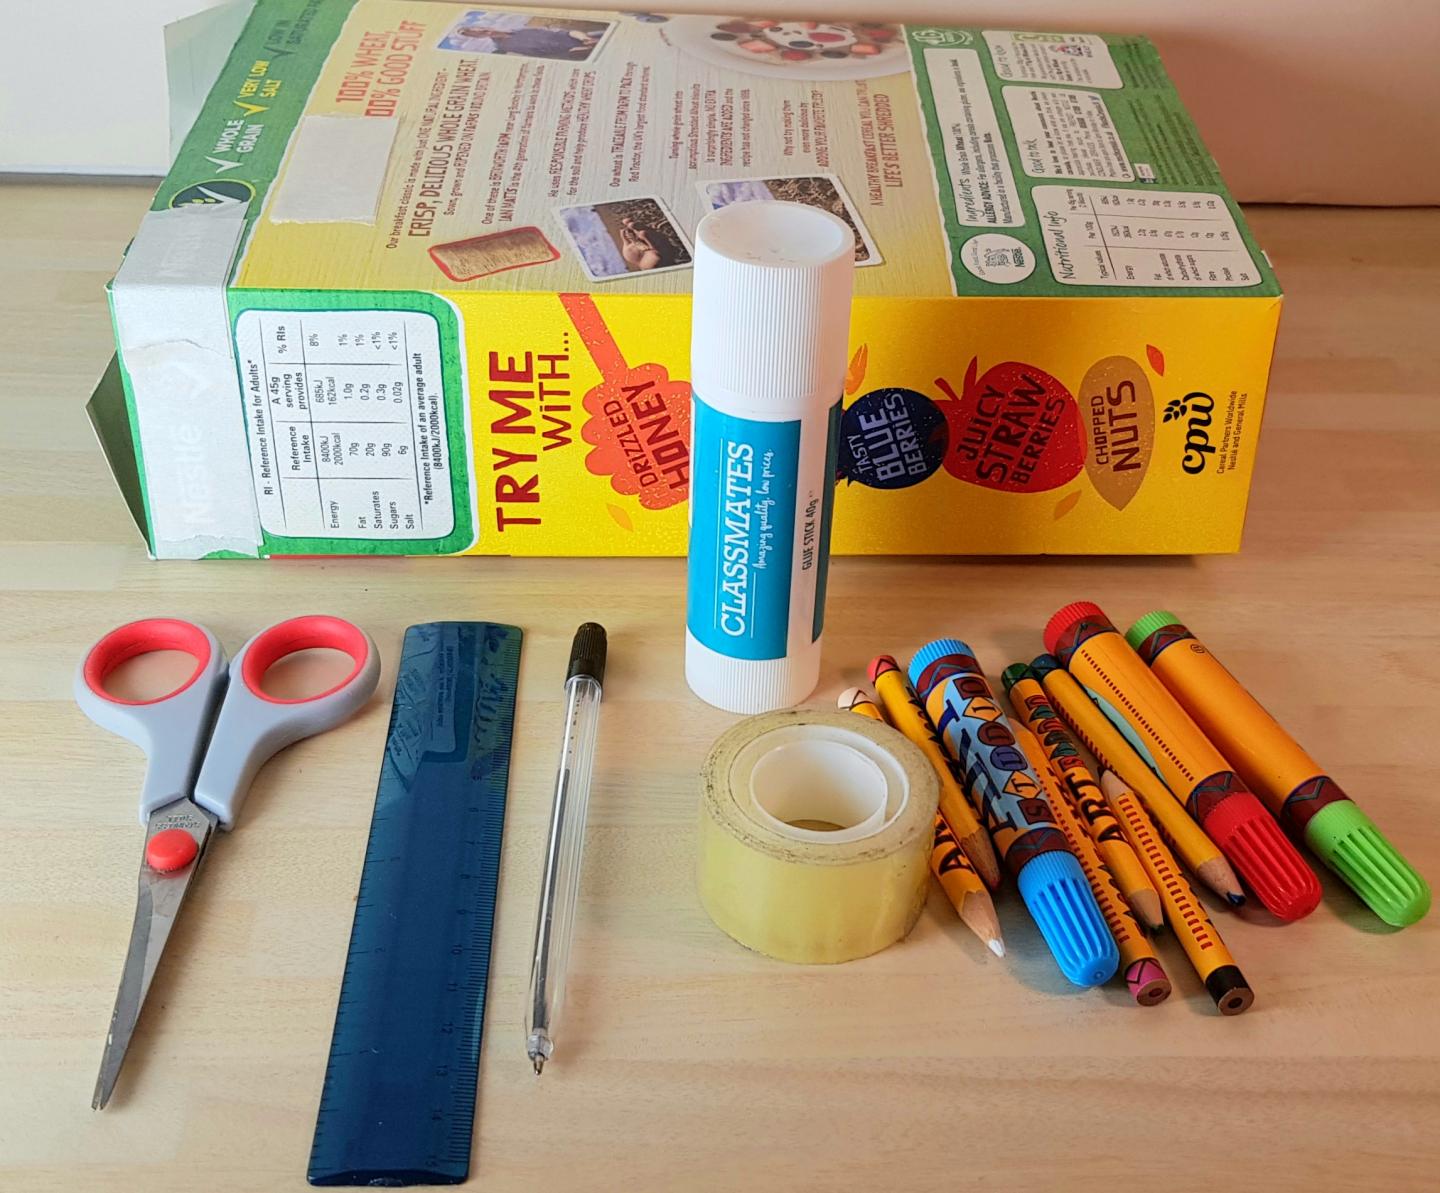 cereal box, glue stick, scissors, ruler, tape, pen, coloured pens and pencils